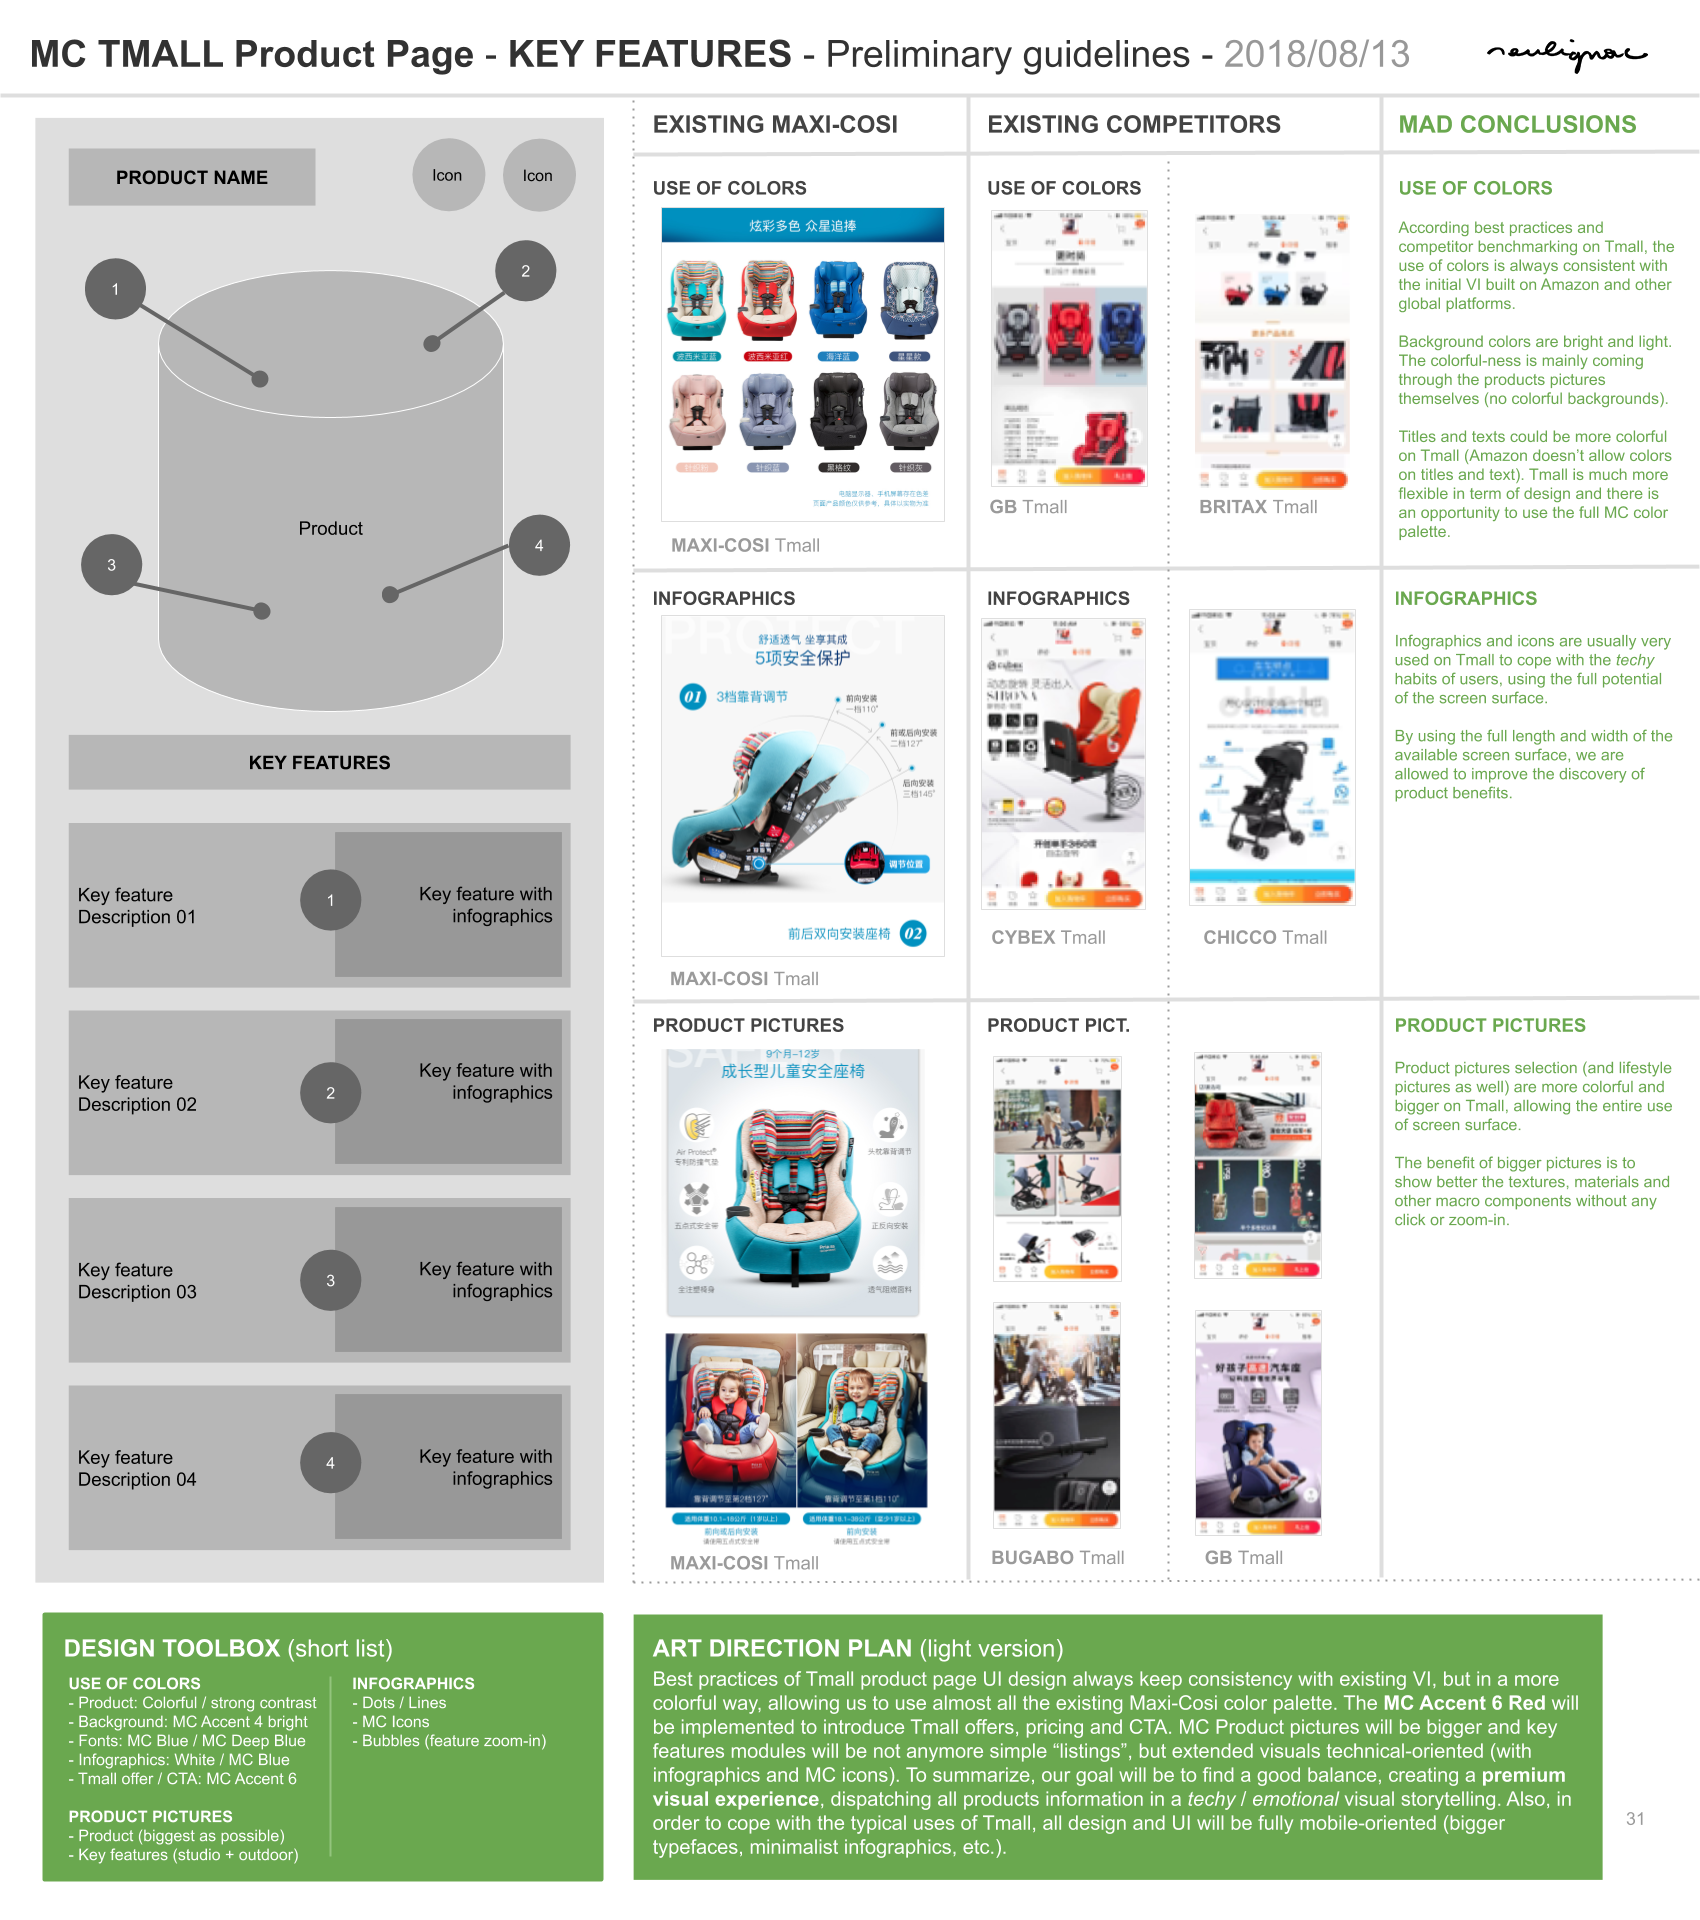 Maxi-Cosi China - Dorel Juvenile - Digital Guidelines - TMALL TAOBAO ALIBABA PRODUCT PAGE - Francois Soulignac, Documents  & Art Direction - MADJOR Labbrand Shanghai, China